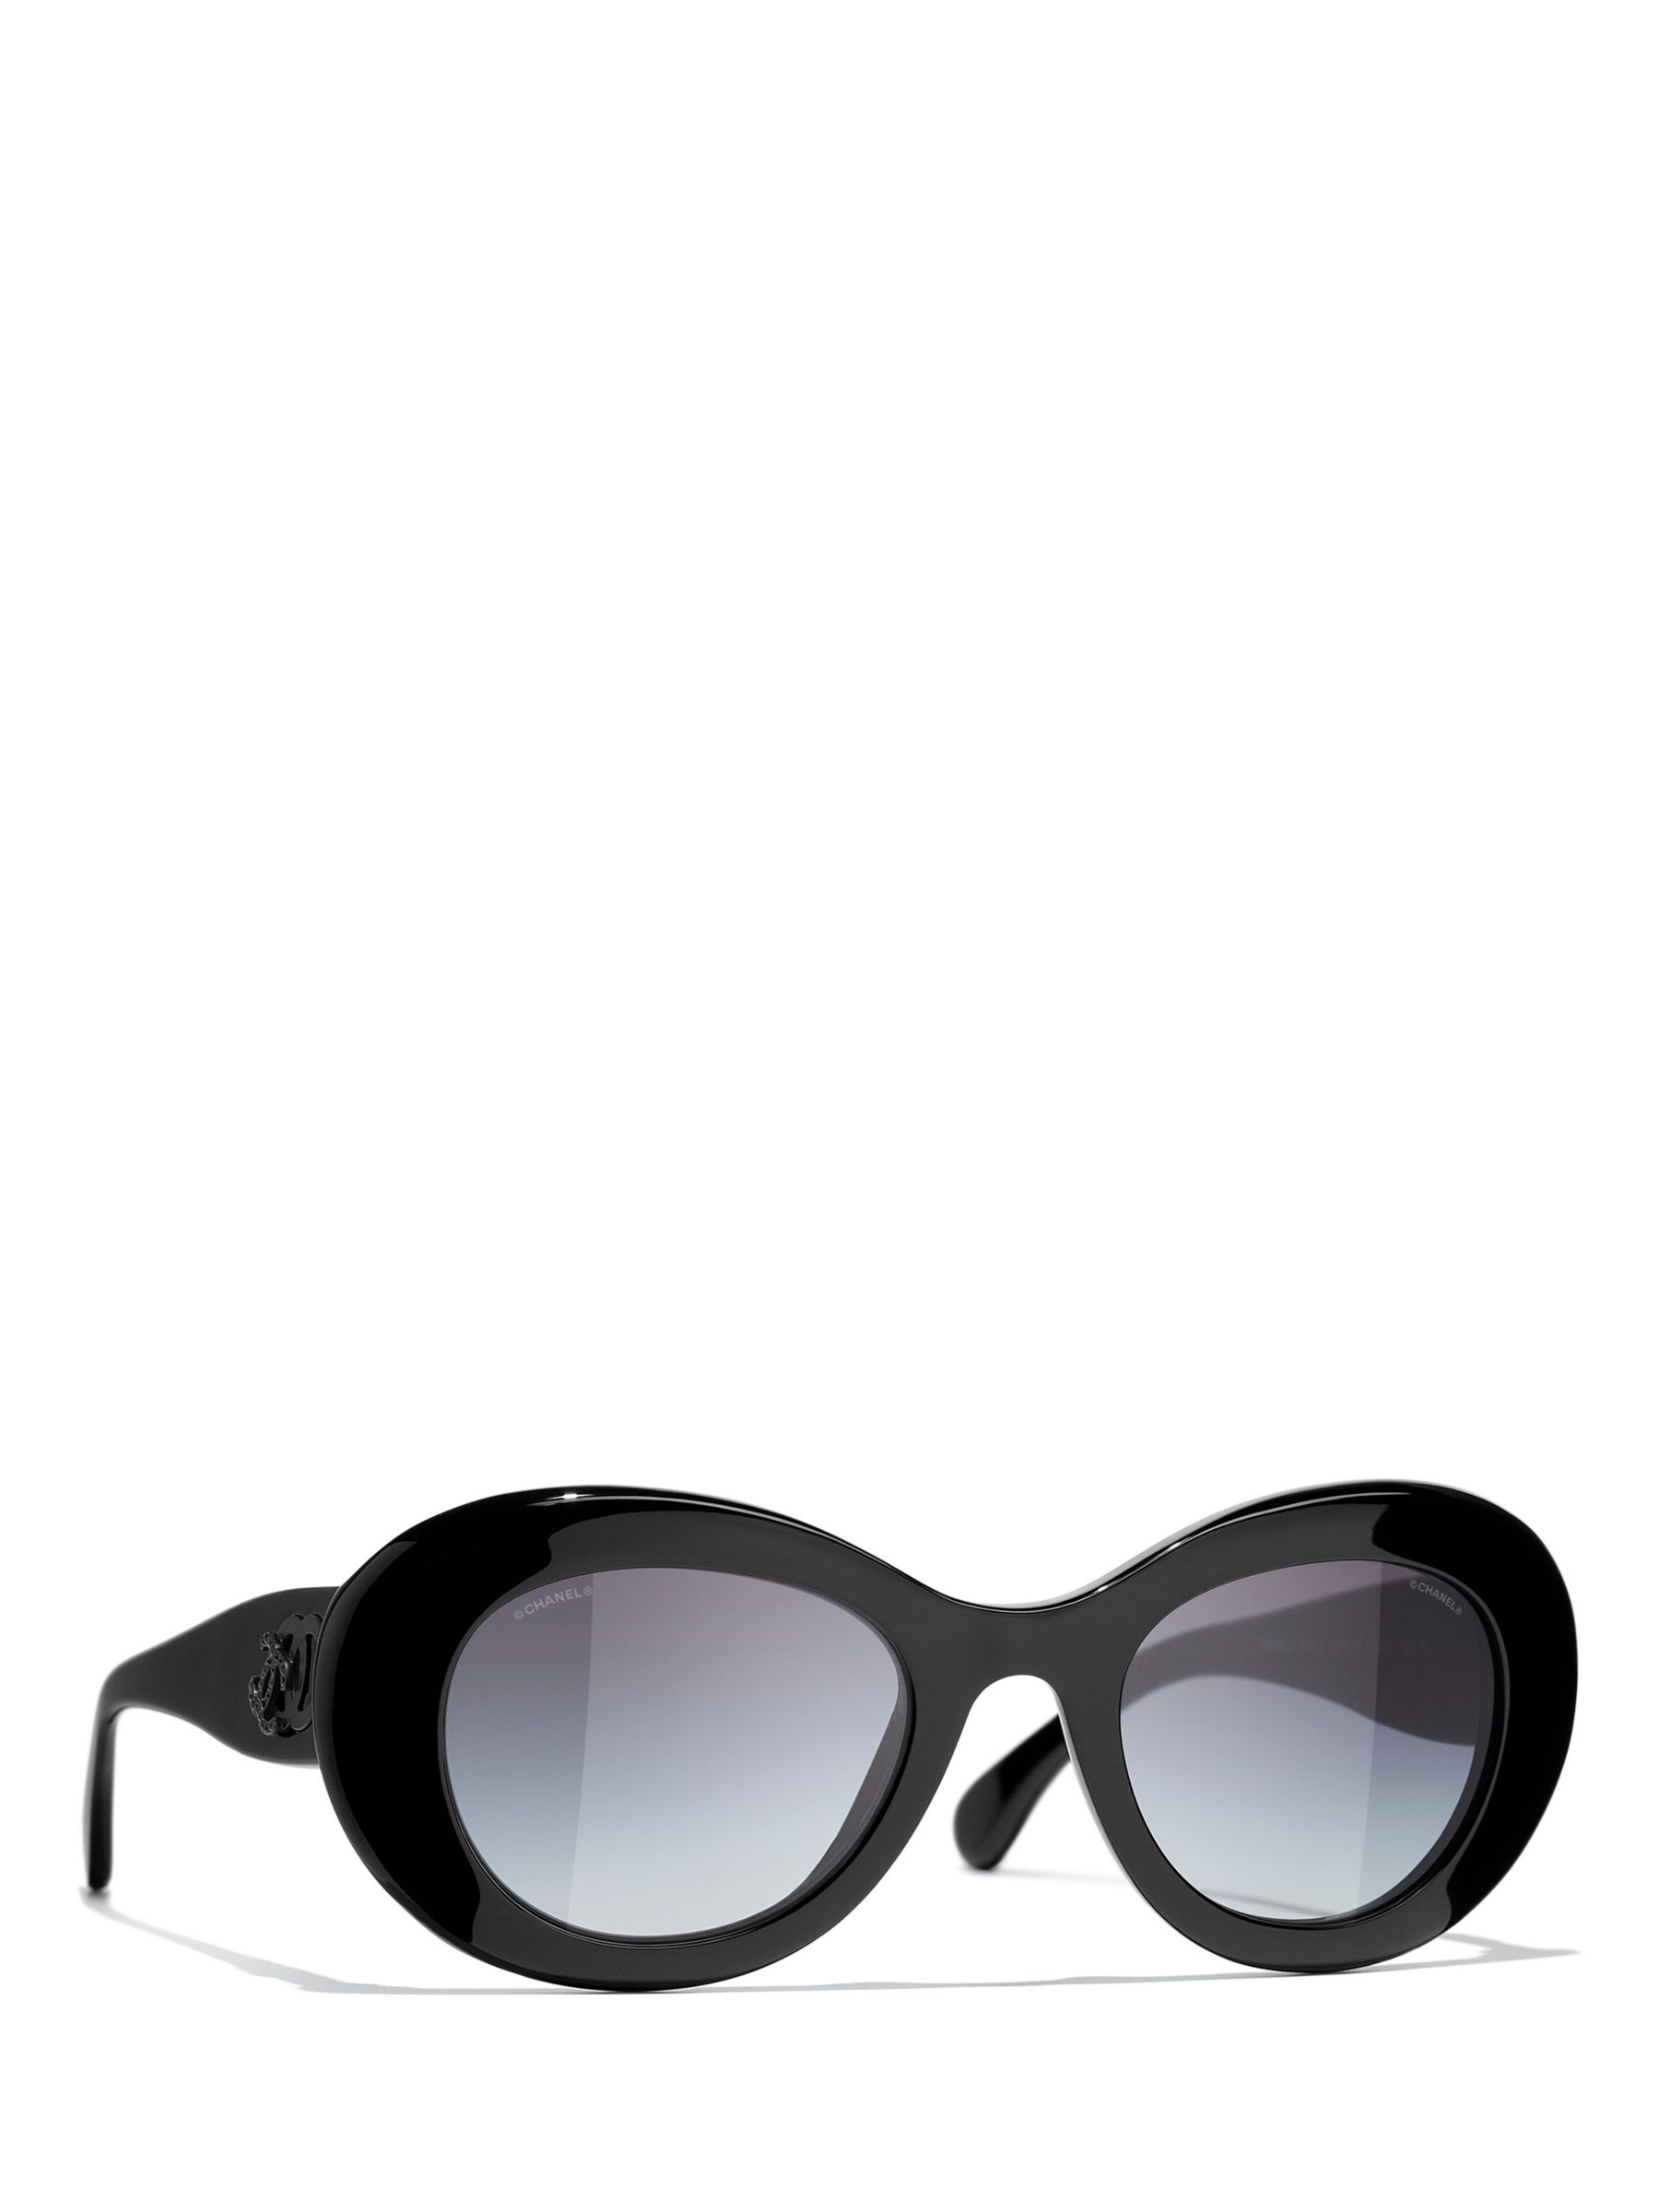 CHANEL Oval Sunglasses CH5469B Black/Grey Gradient at John Lewis